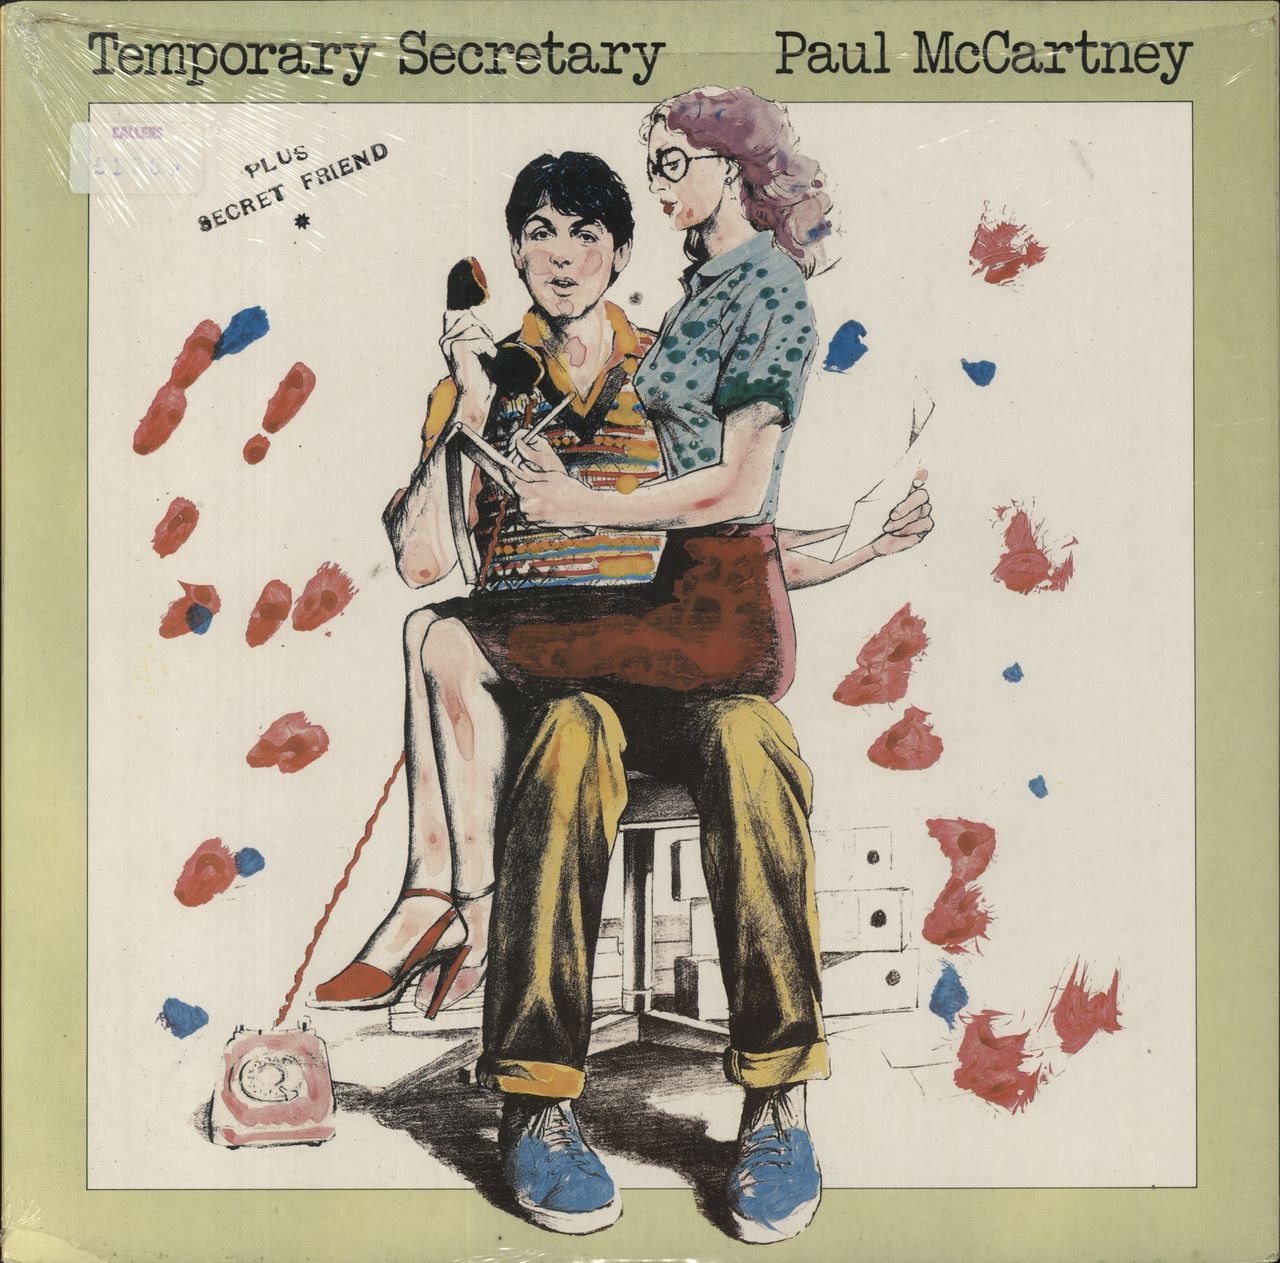 Paul McCartney and Wings Temporary Secretary - Open Shrink UK 12" vinyl single (12 inch record / Maxi-single) 12R6039